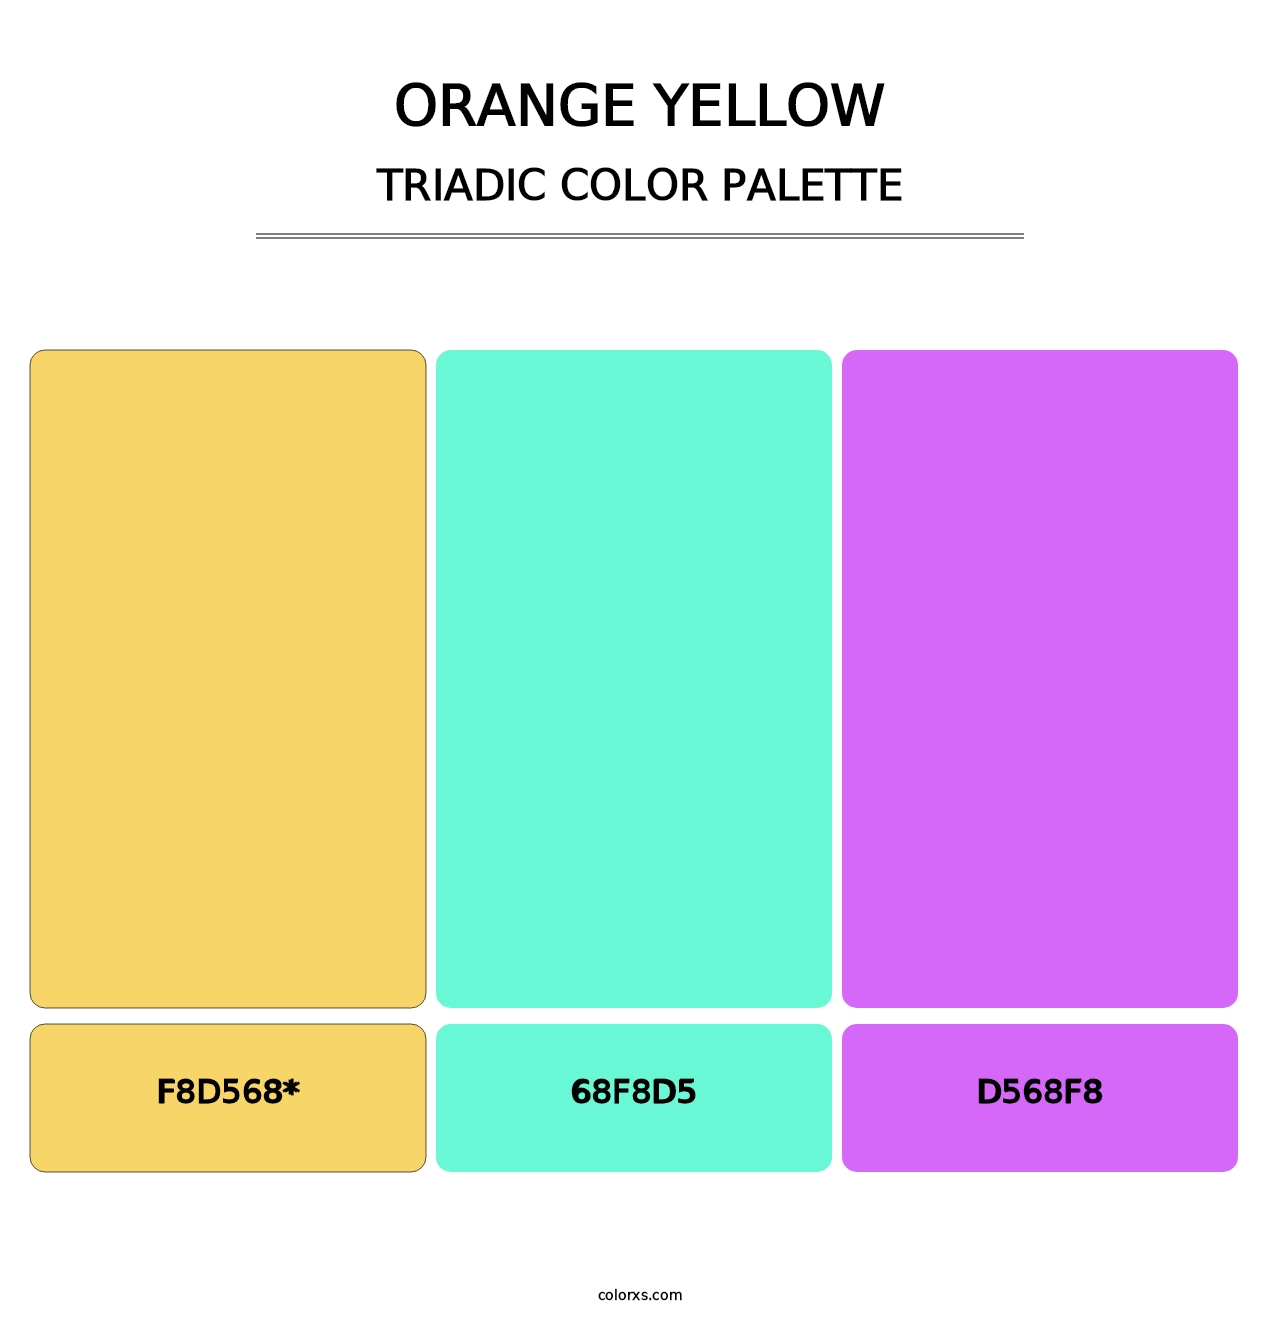 Orange Yellow - Triadic Color Palette